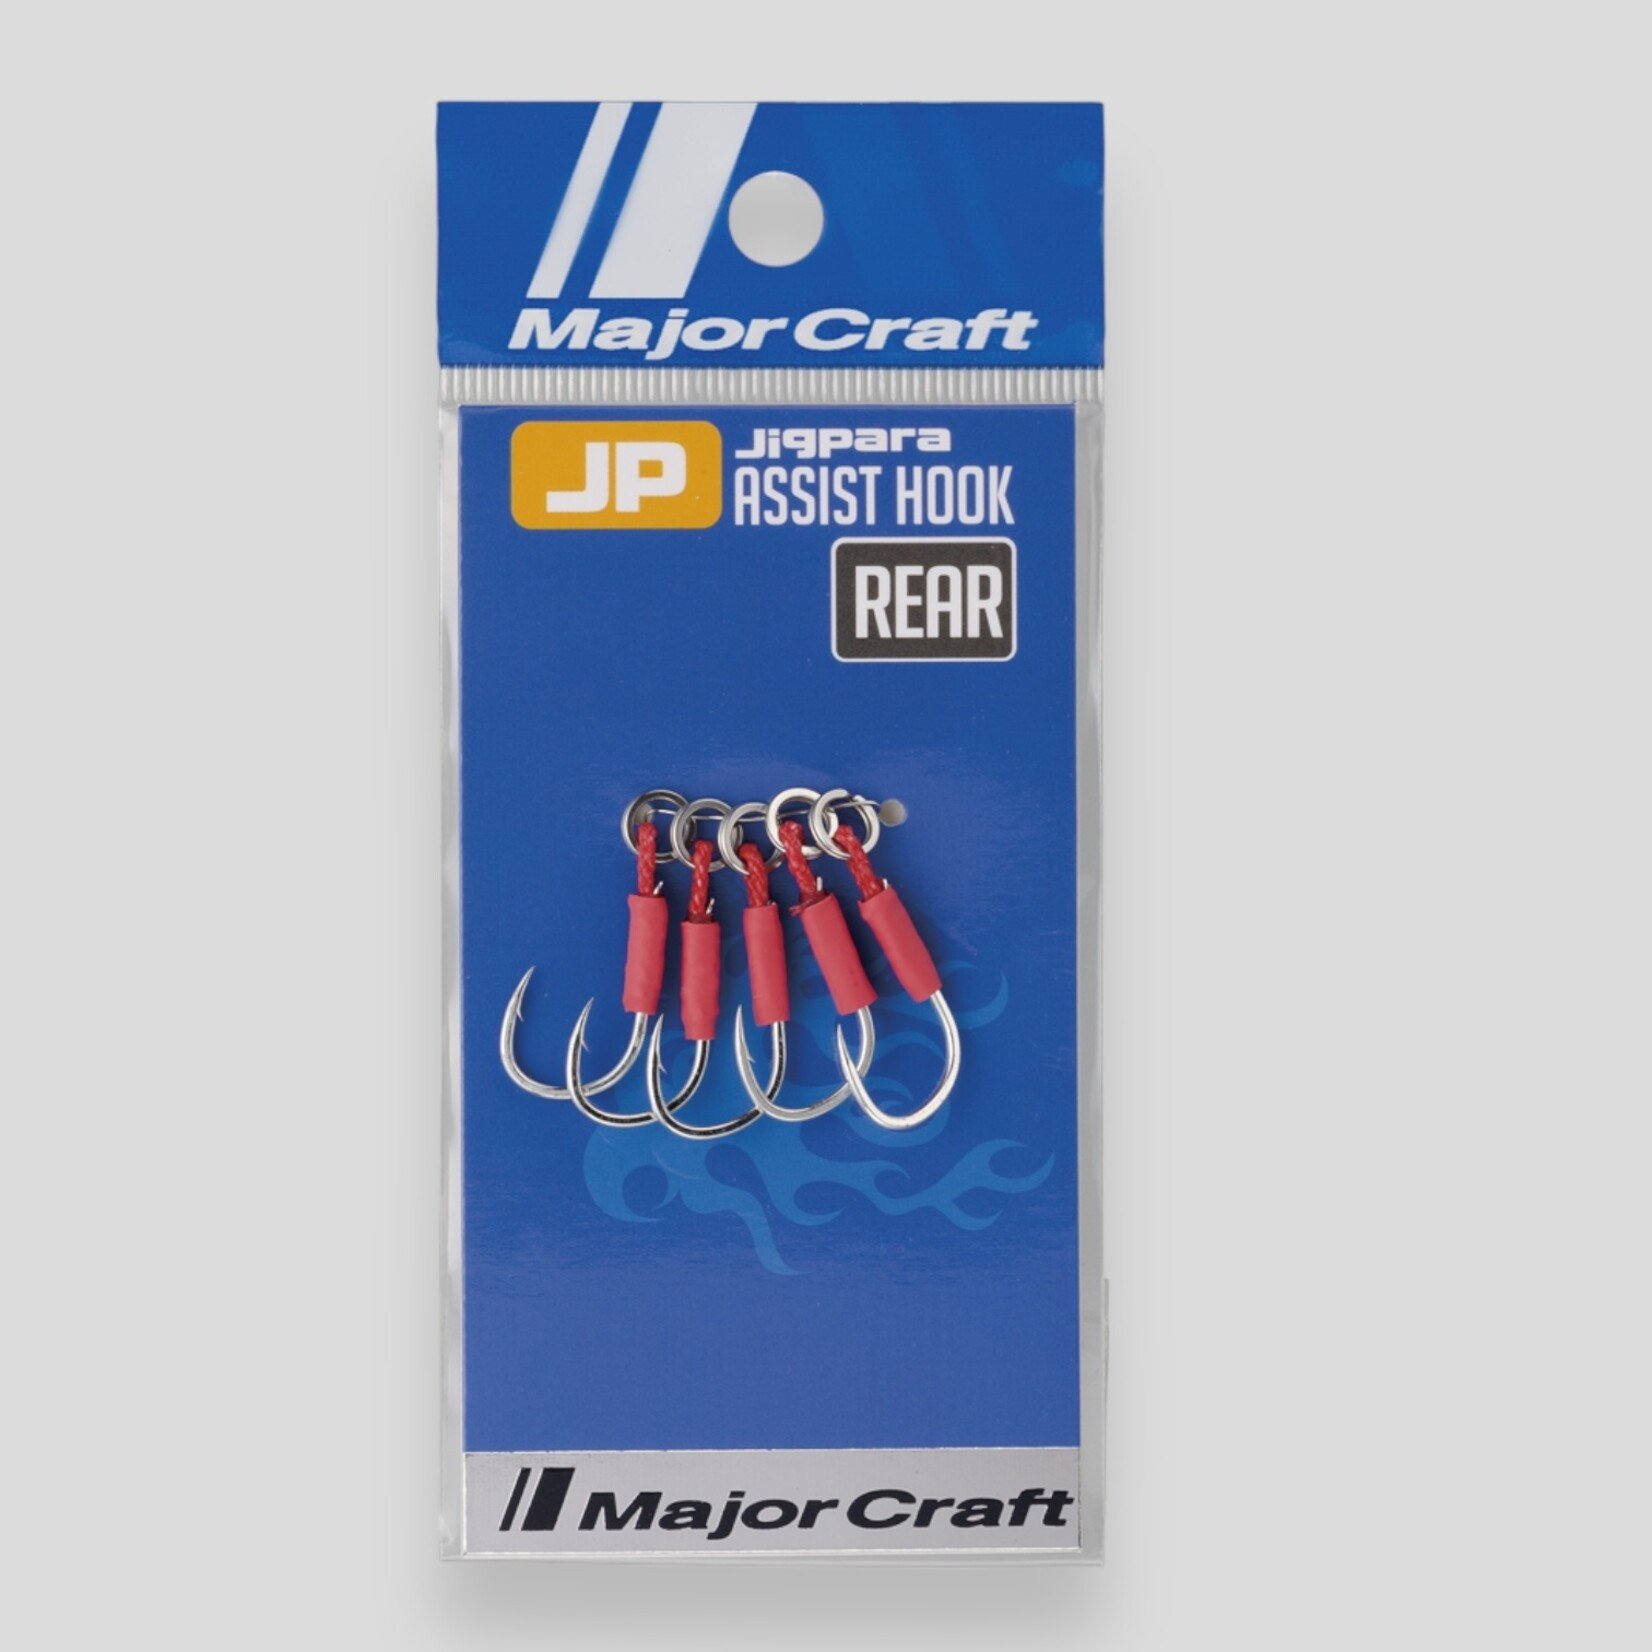 Major Craft Major Craft Jigpara Assist Hook